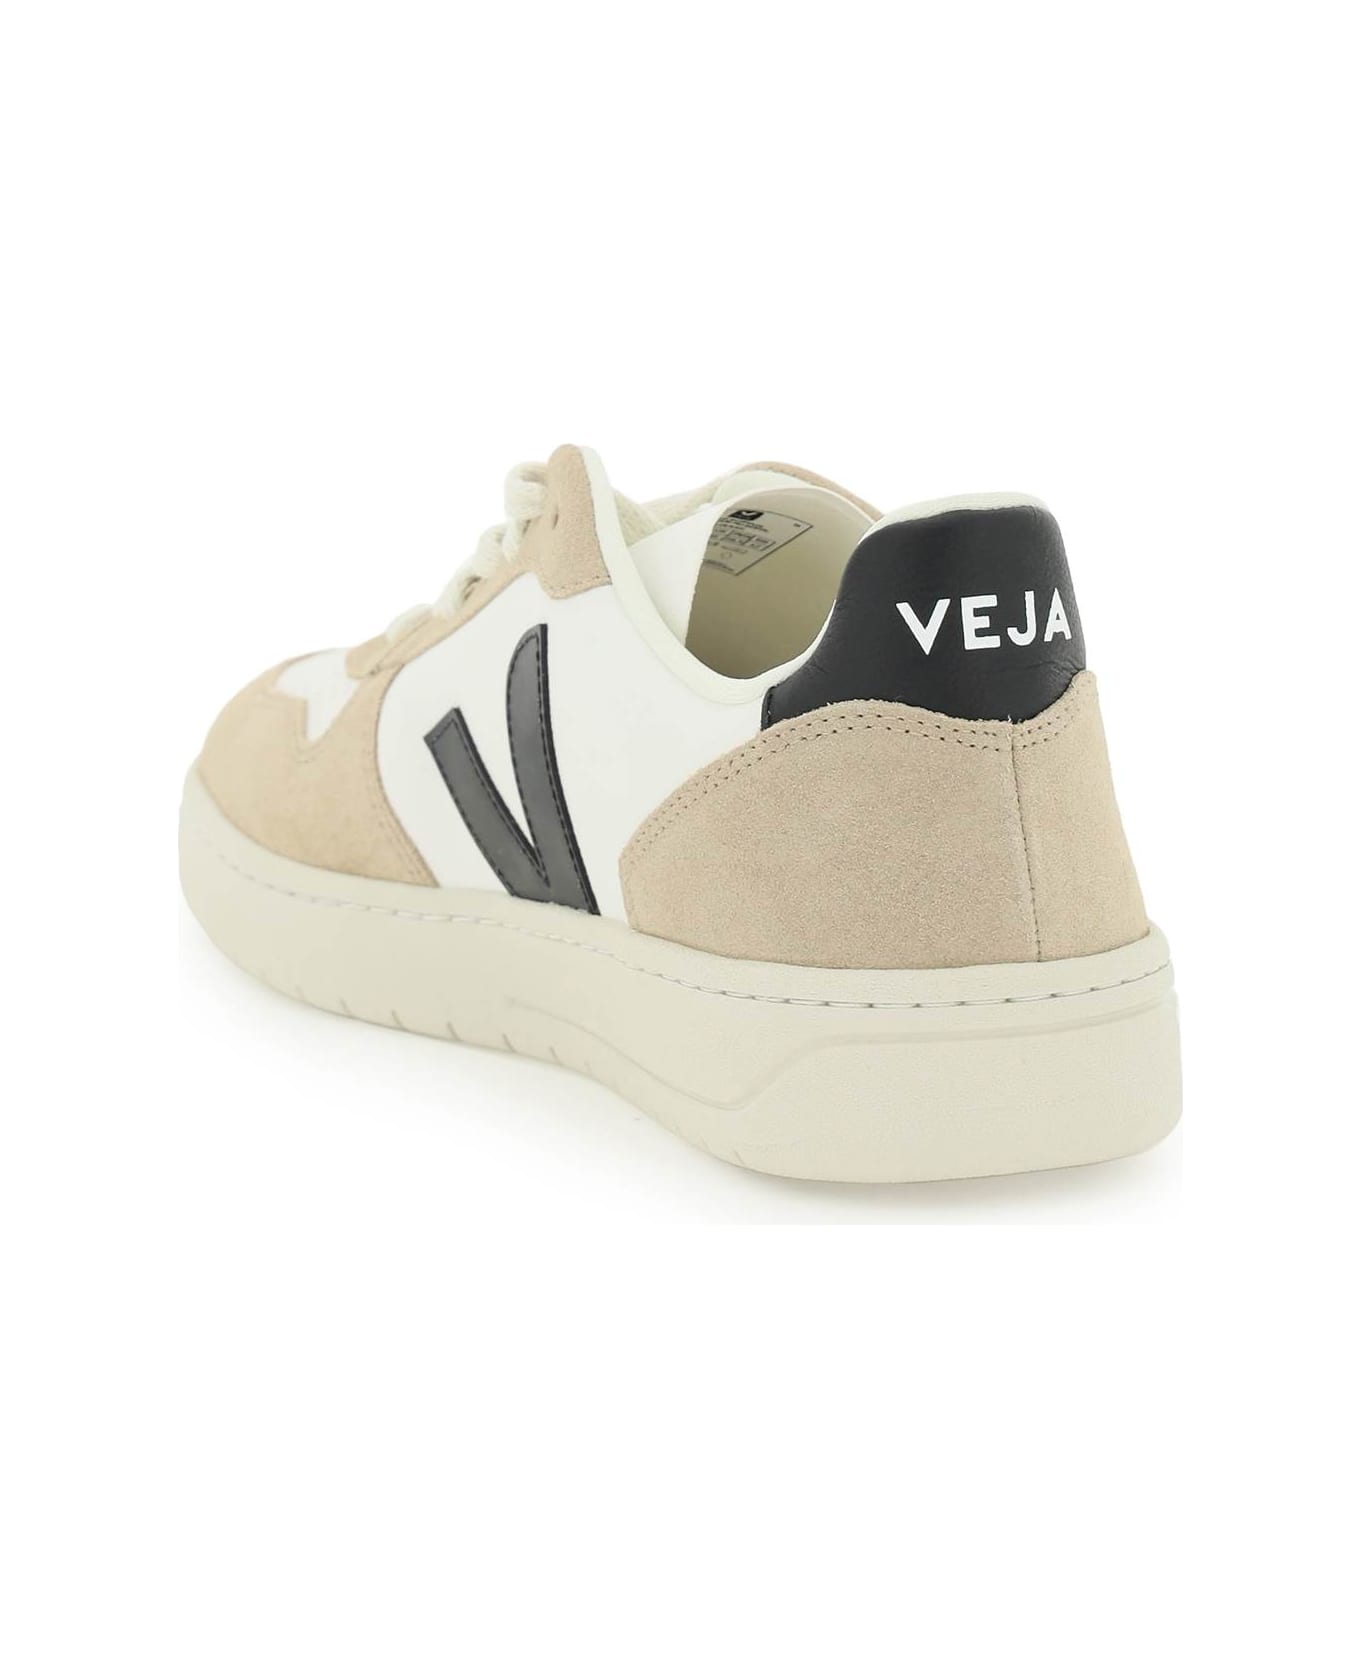 Veja V-10 Suede Sneakers - EXTRA WHITE BLACK SAHARA (Beige)